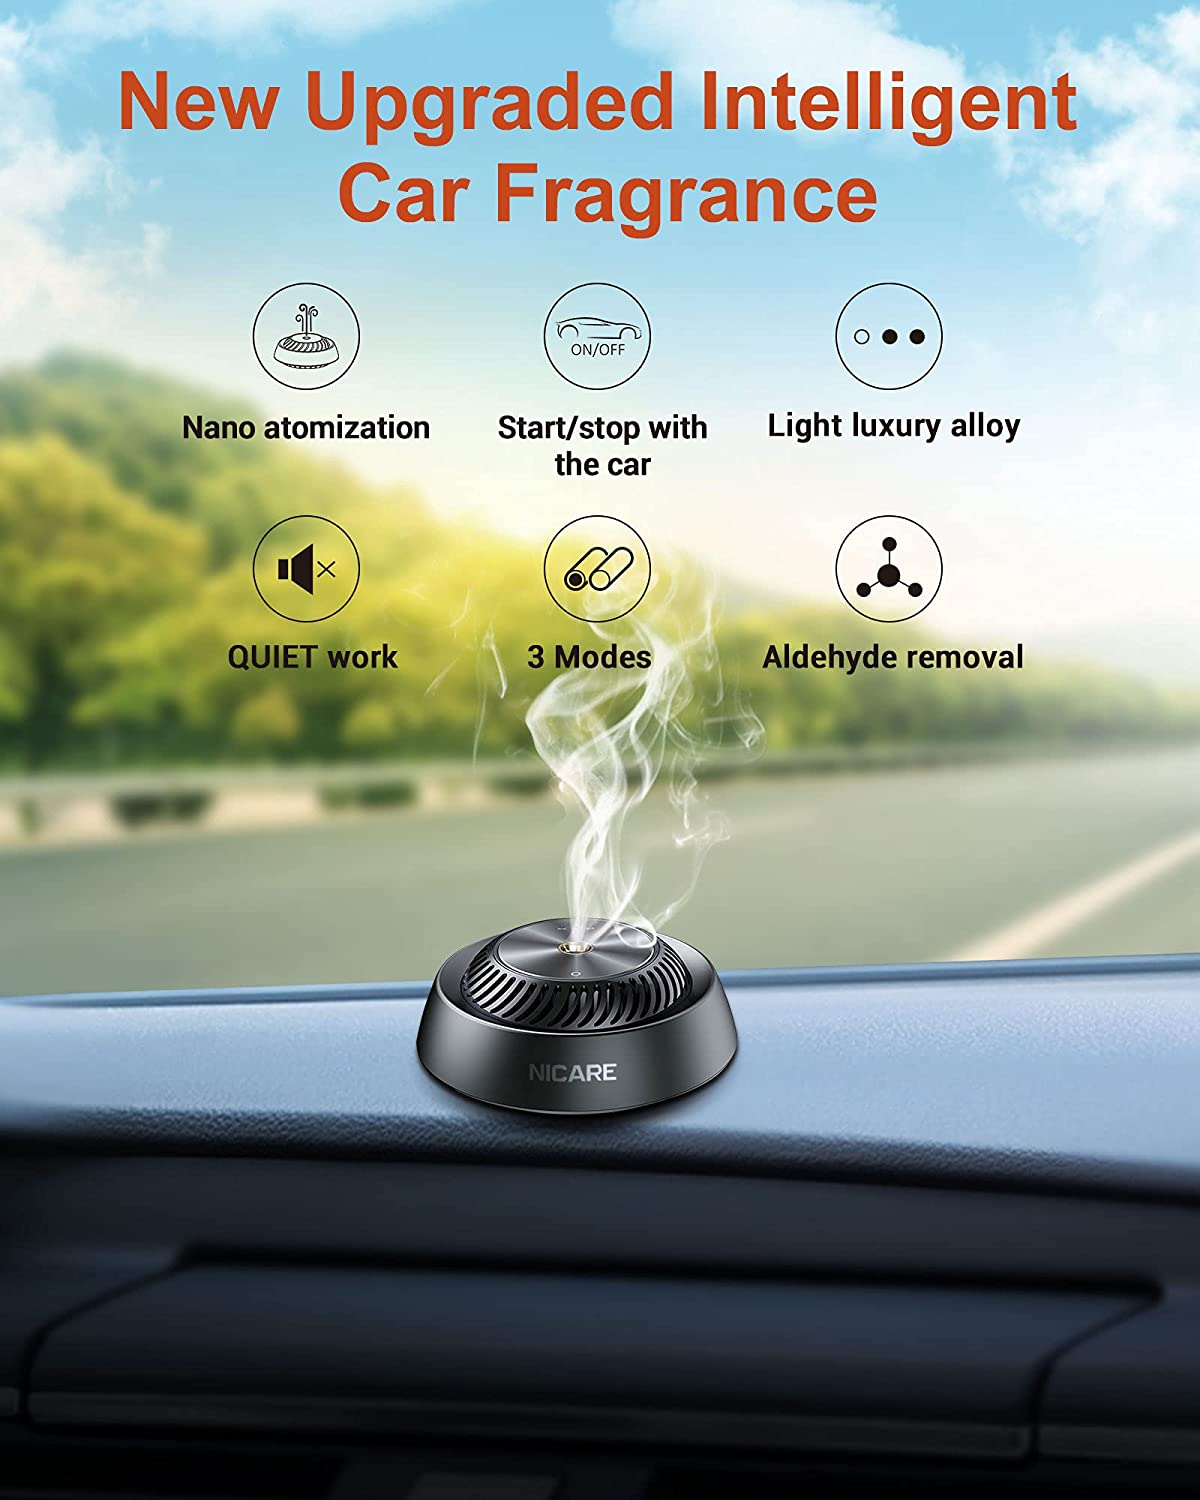 Buy Euro Care Car Air Freshener, Car Perfume - Fragrance Tropical